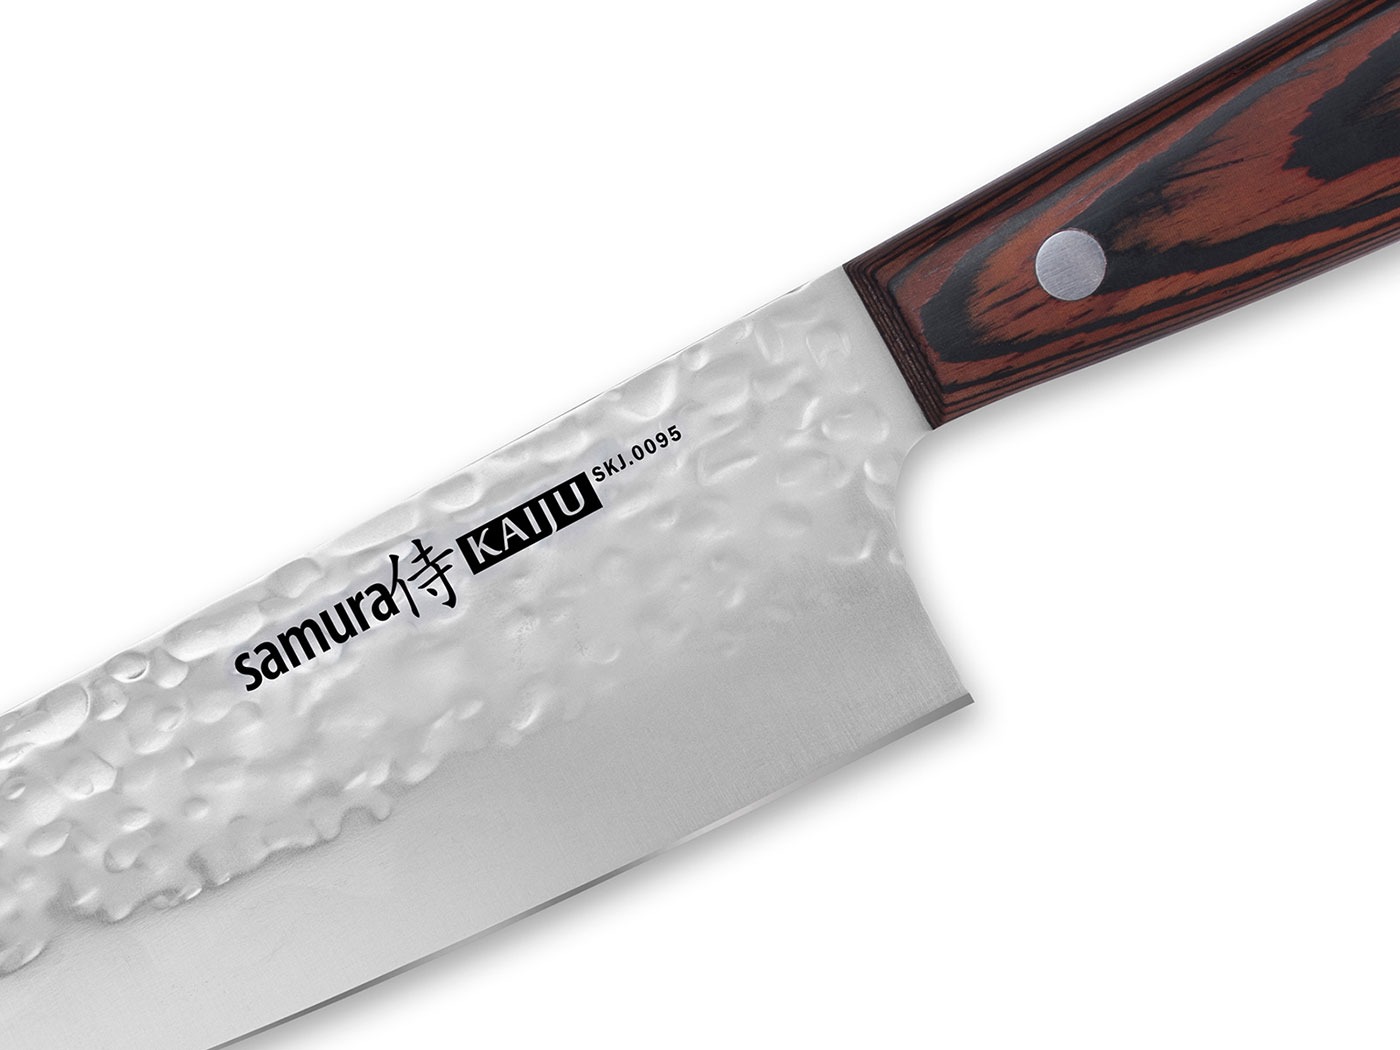 Samura Kaiju Chef's Knife